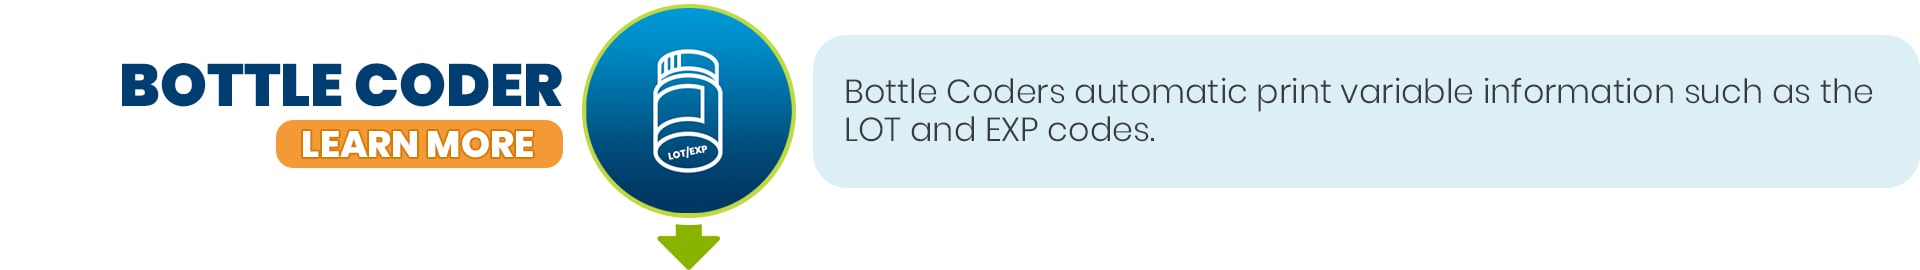 Bottle Coder - Block